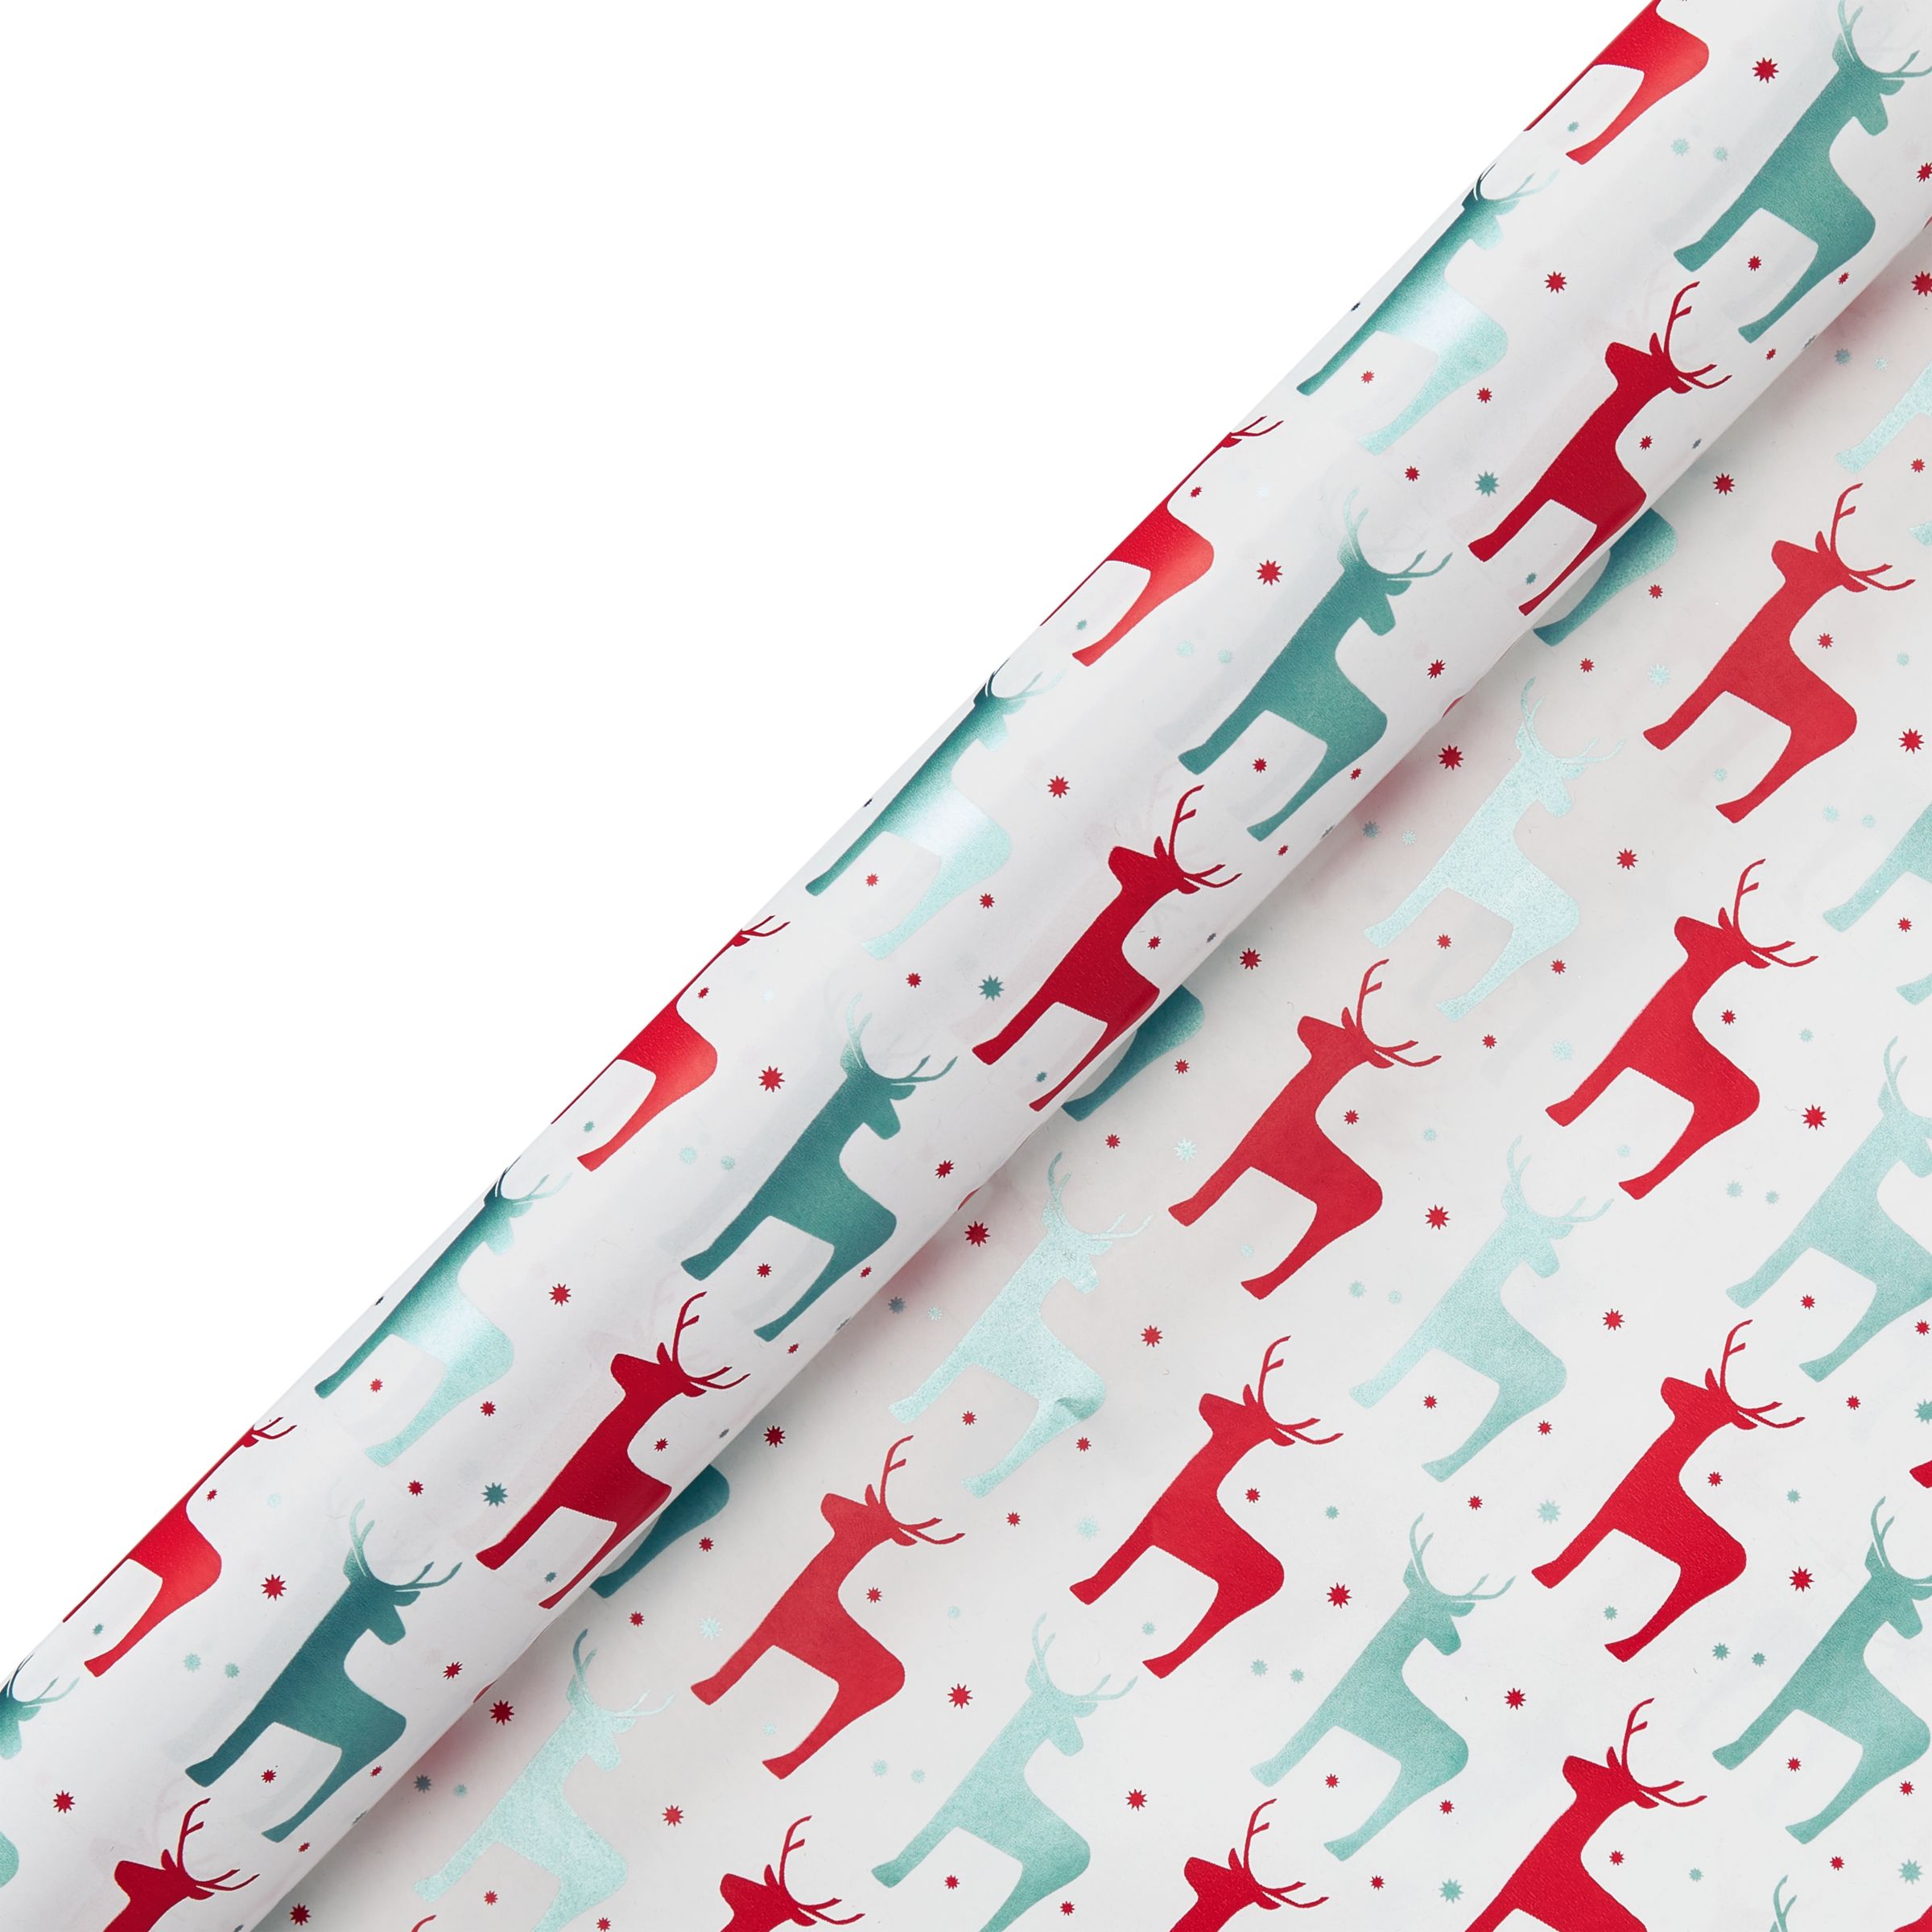 John Lewis & Partners Rainbow Reindeer Gift Wrap, 10m